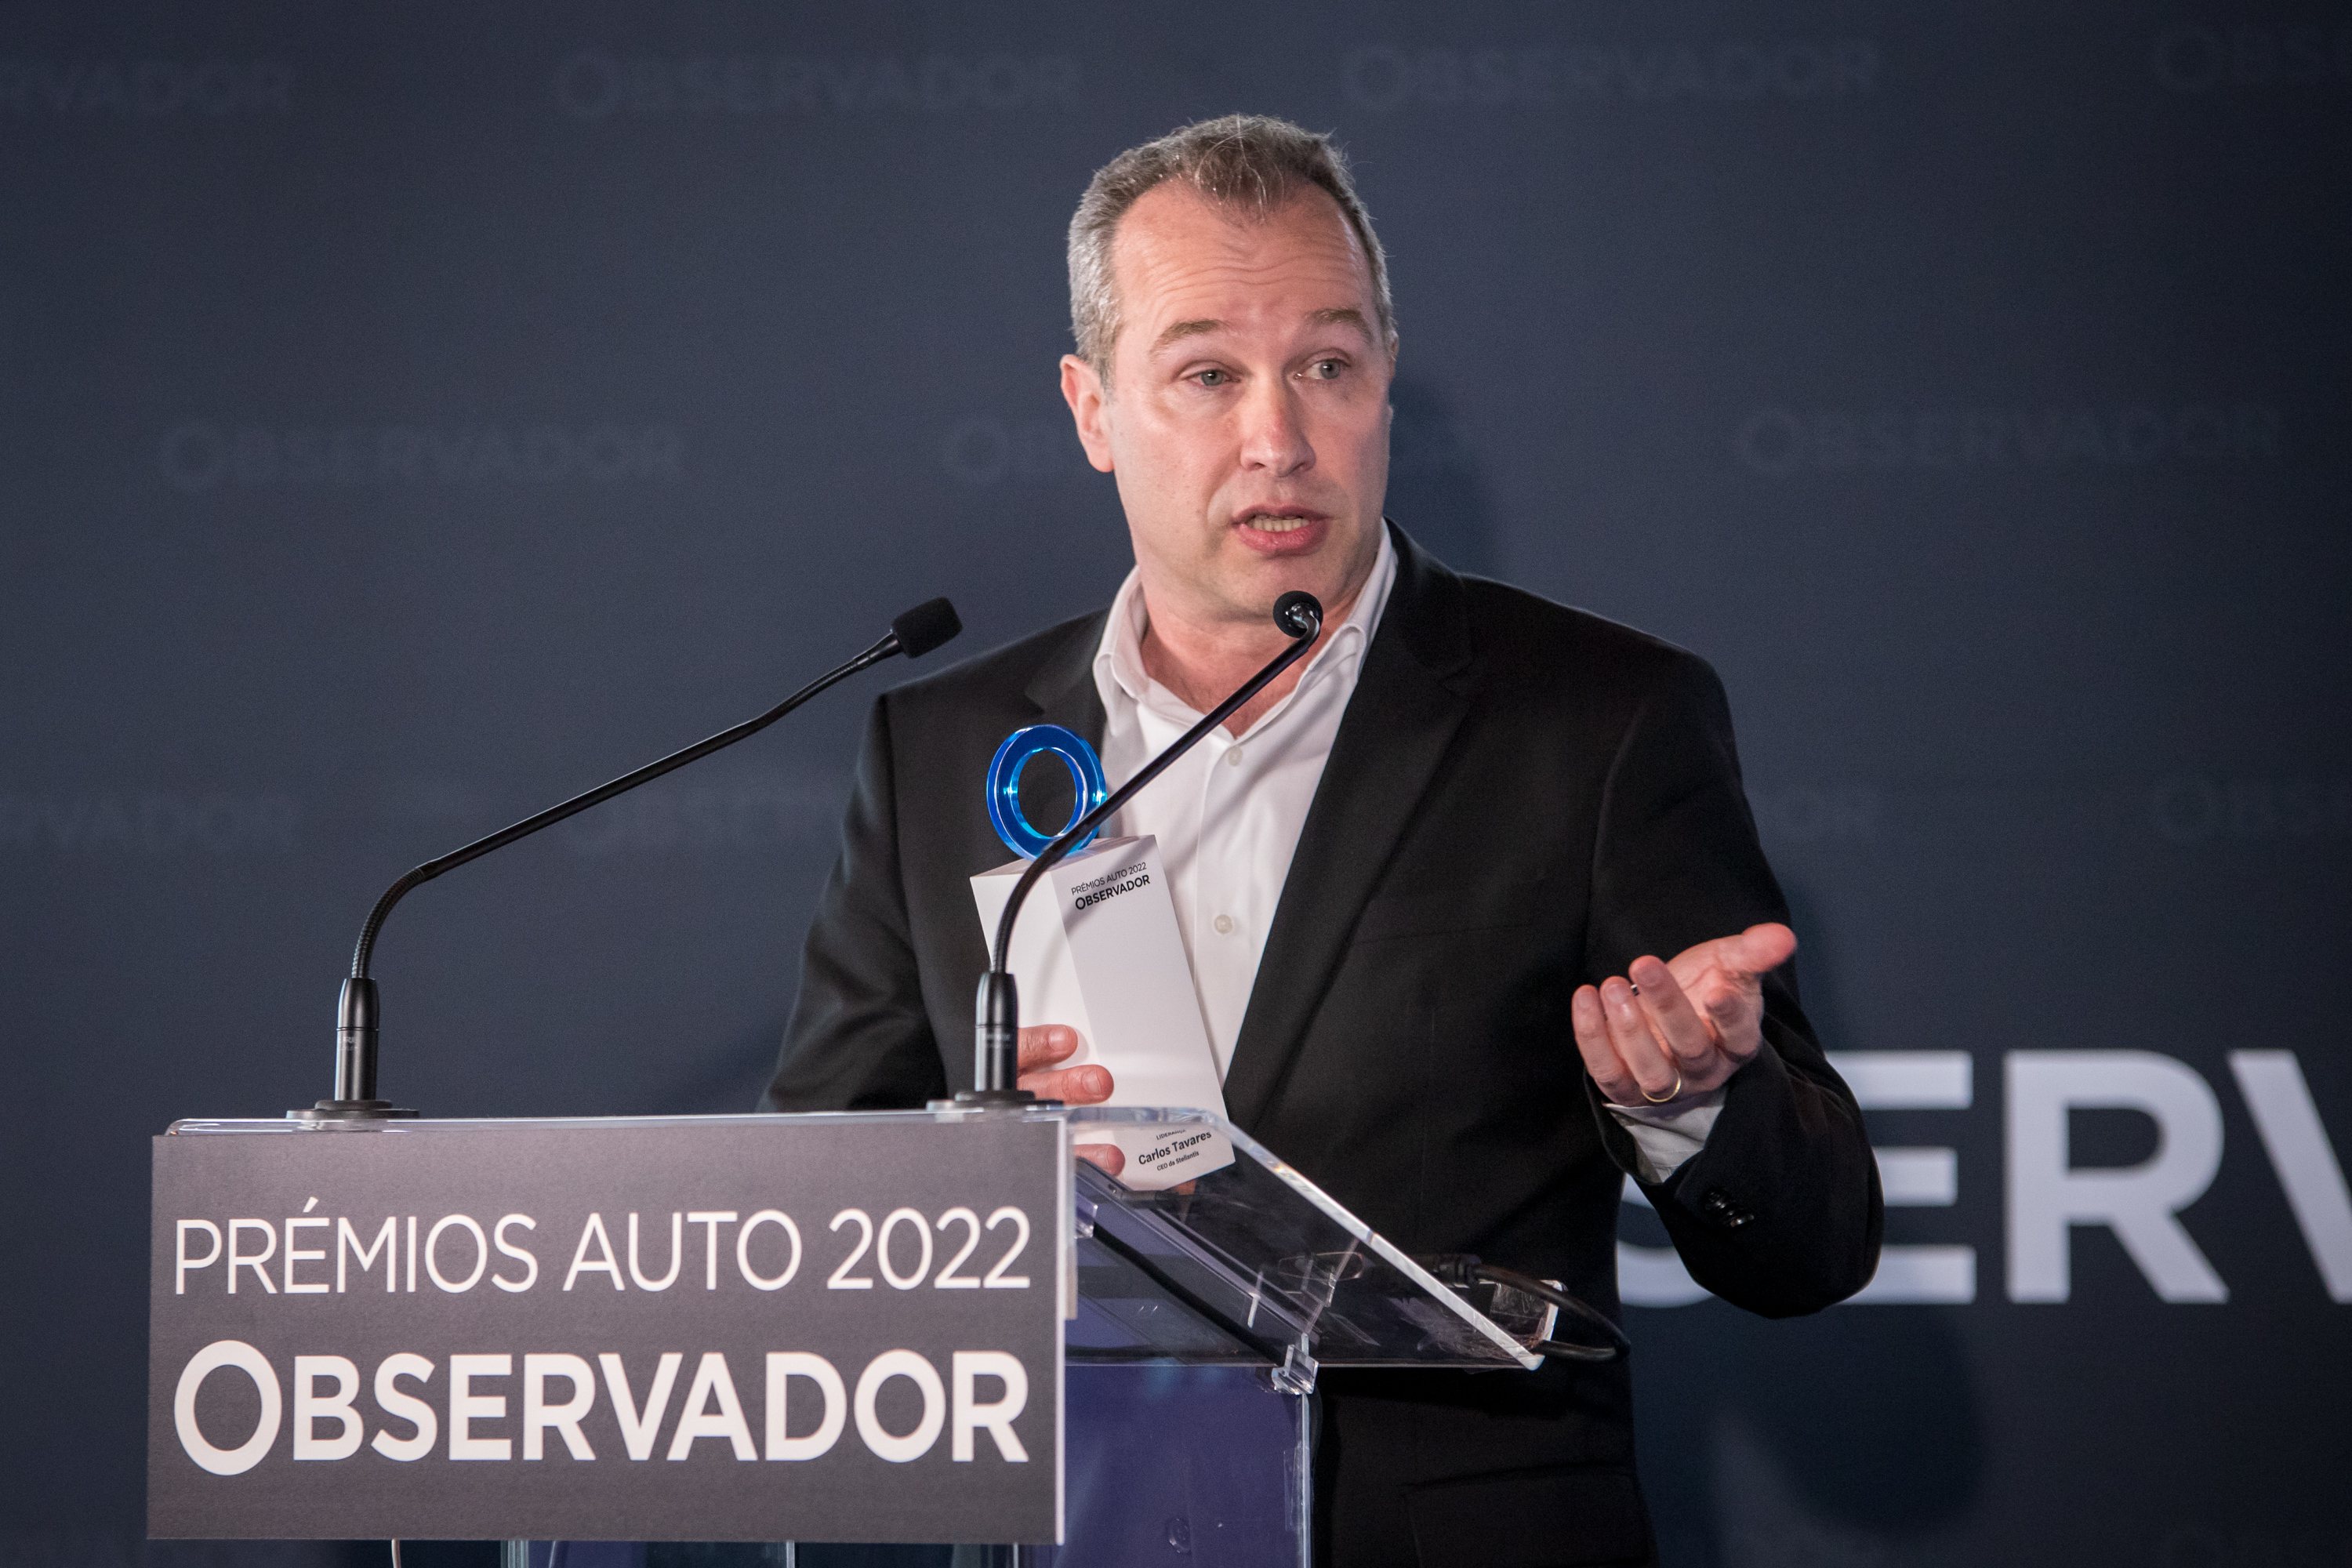 Prémios Auto 2022 Observador 28 de Abril de 2022